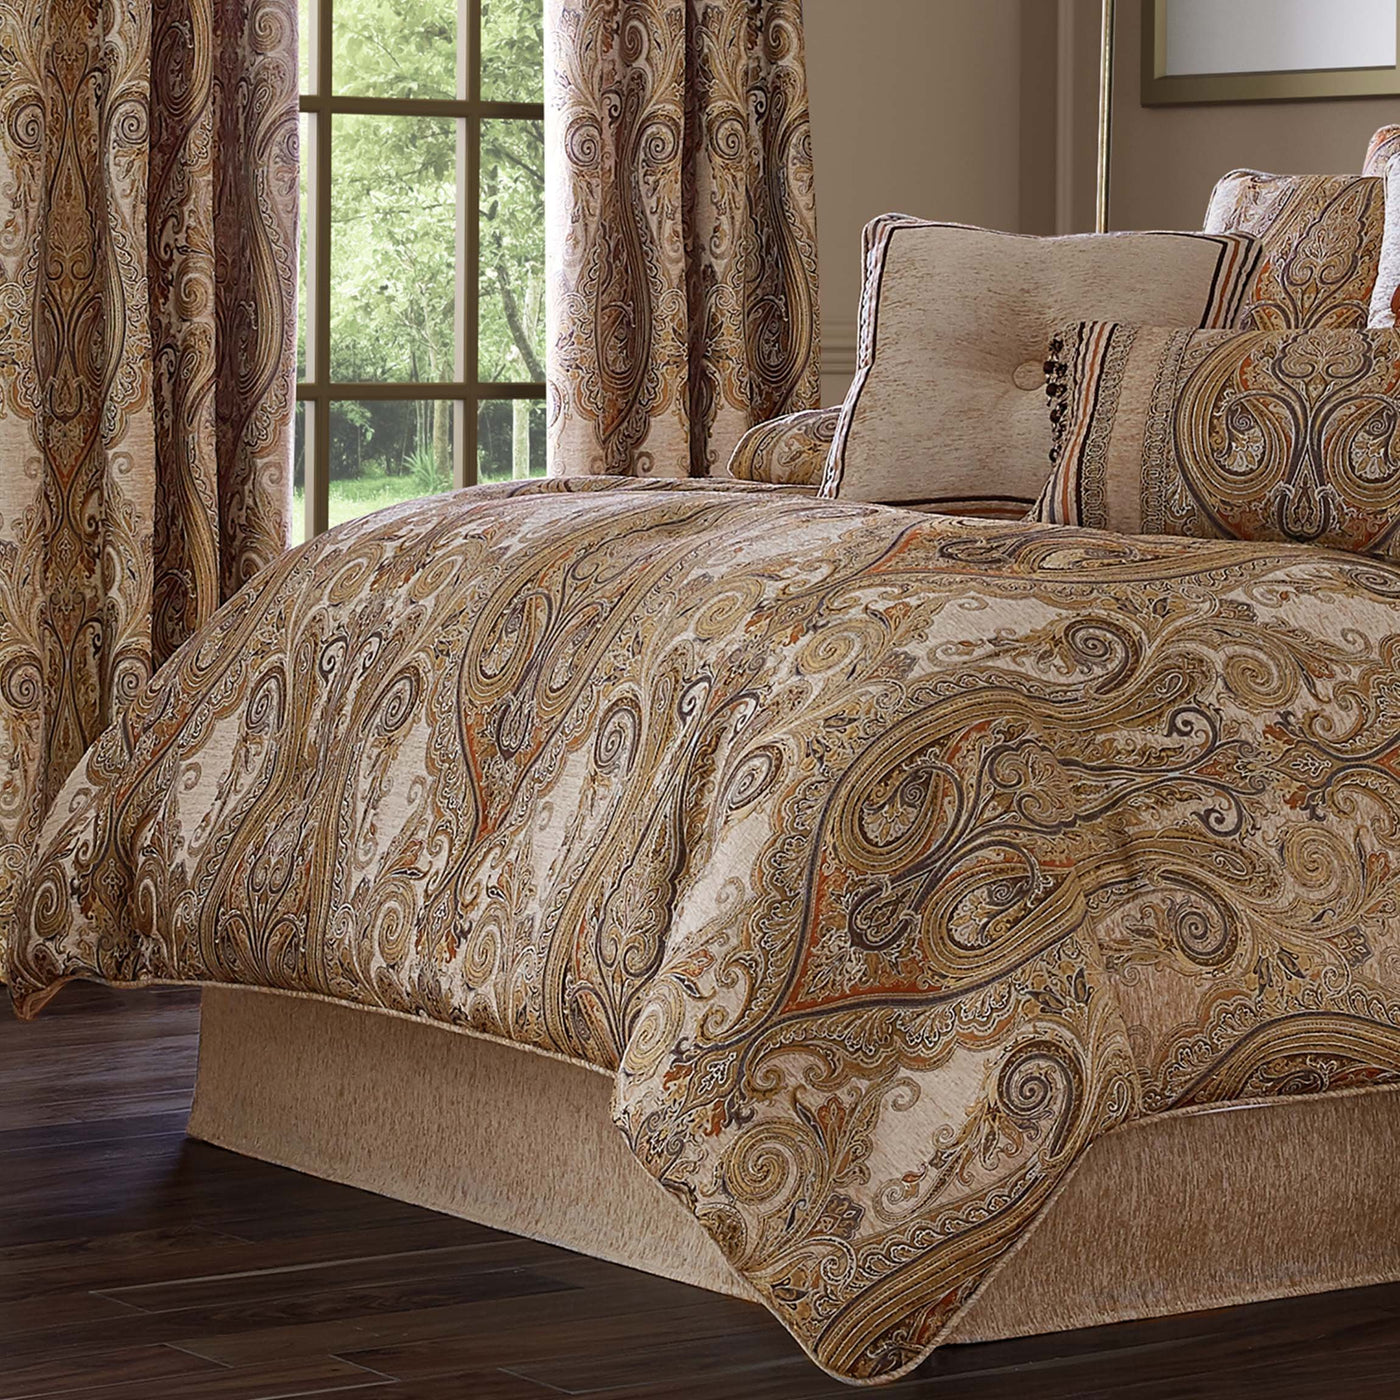 luxury comforter sets king size